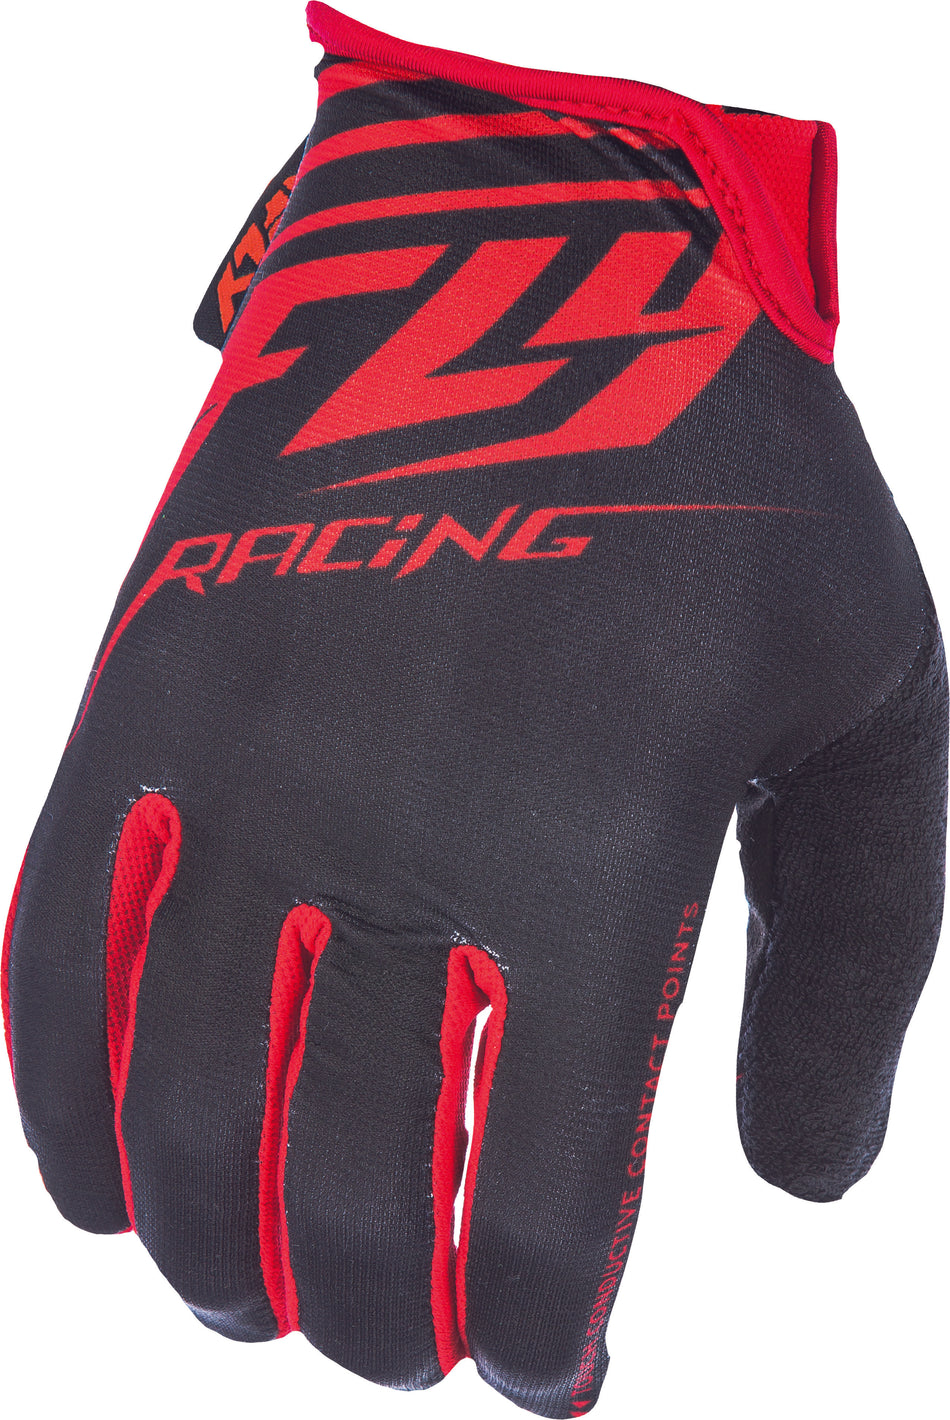 FLY RACING Media Gloves Black/Red Sz 10 350-07210